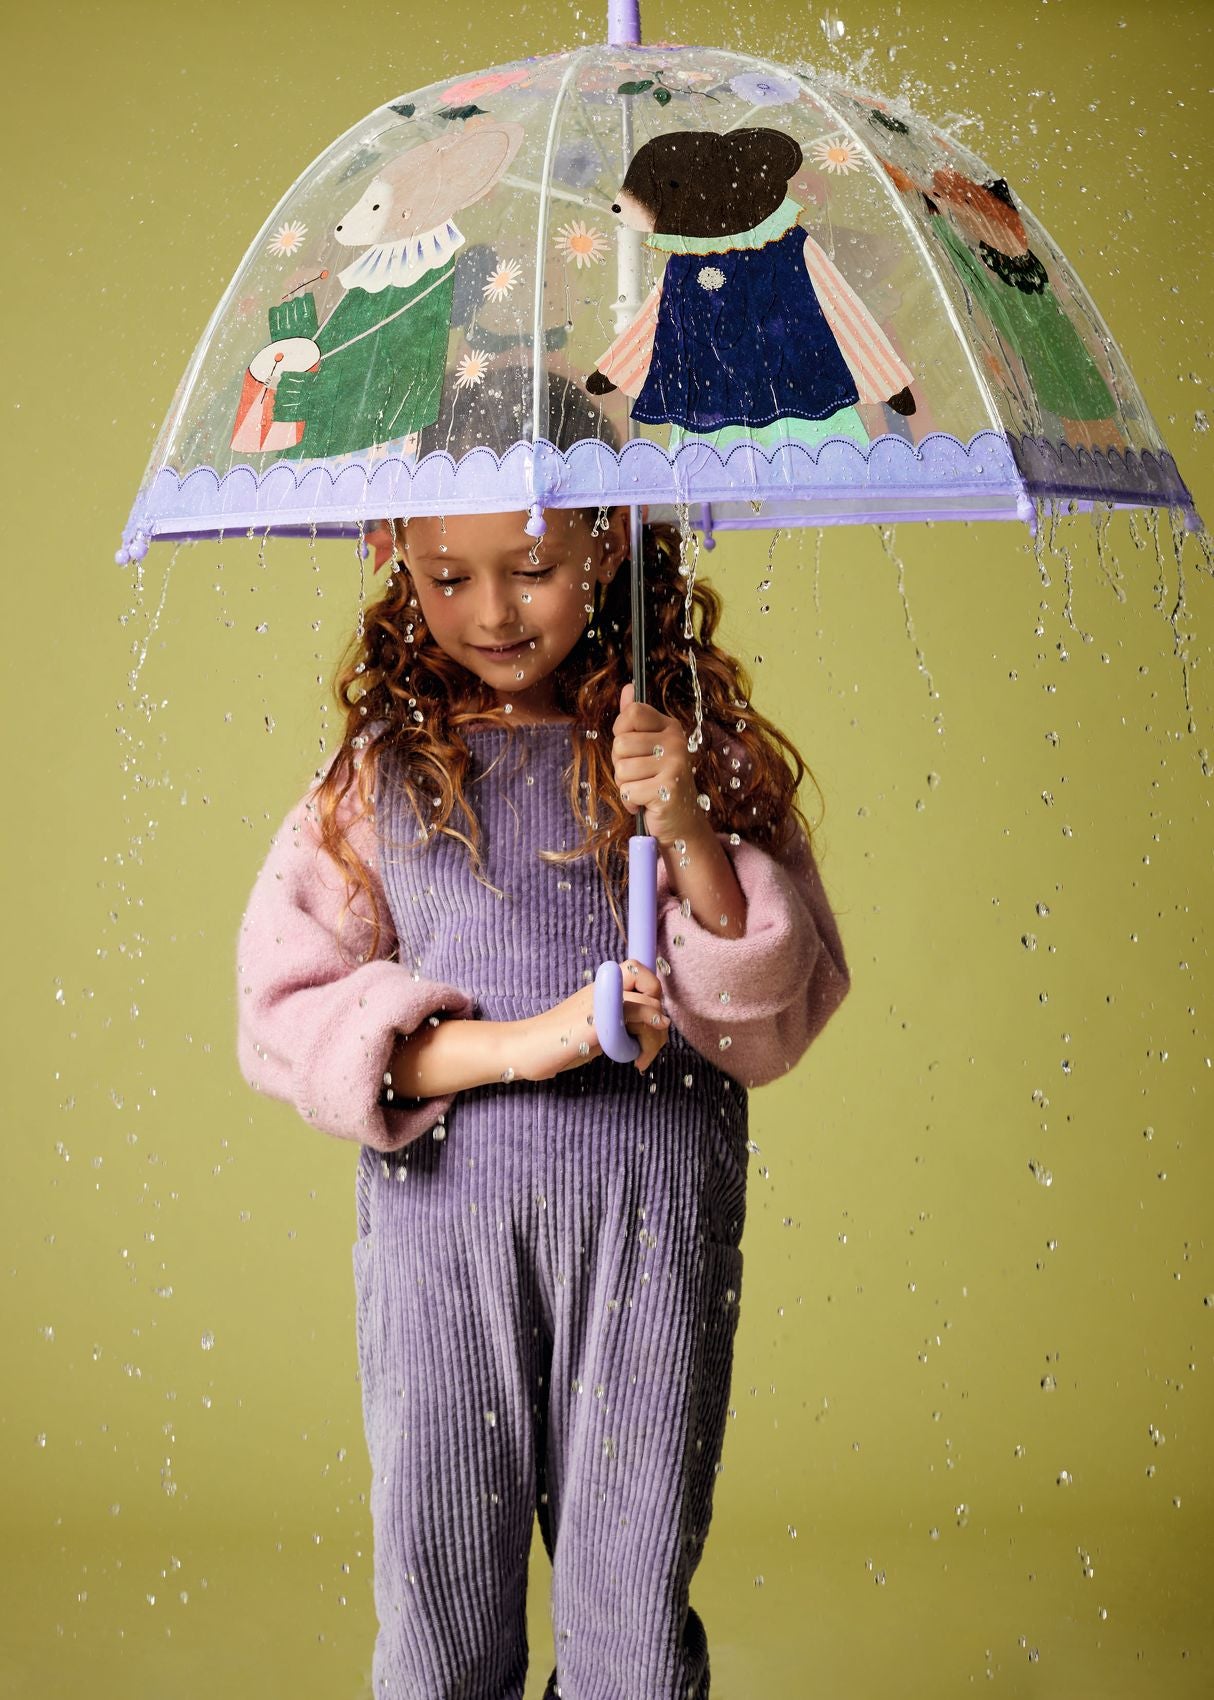 Djeco - Parapluie